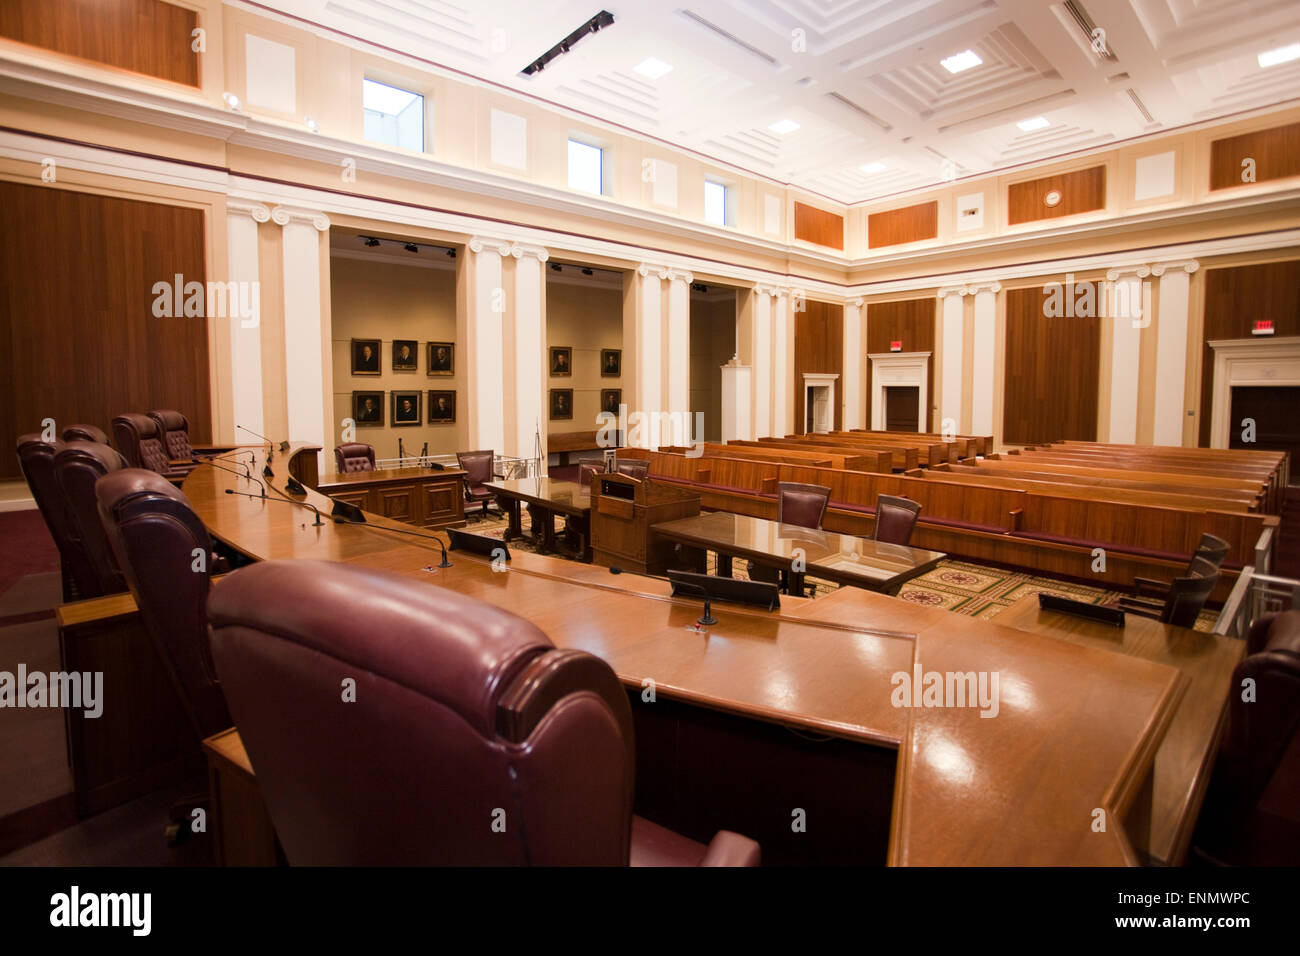 Florida Supreme Court courtroom interior. Stock Photo